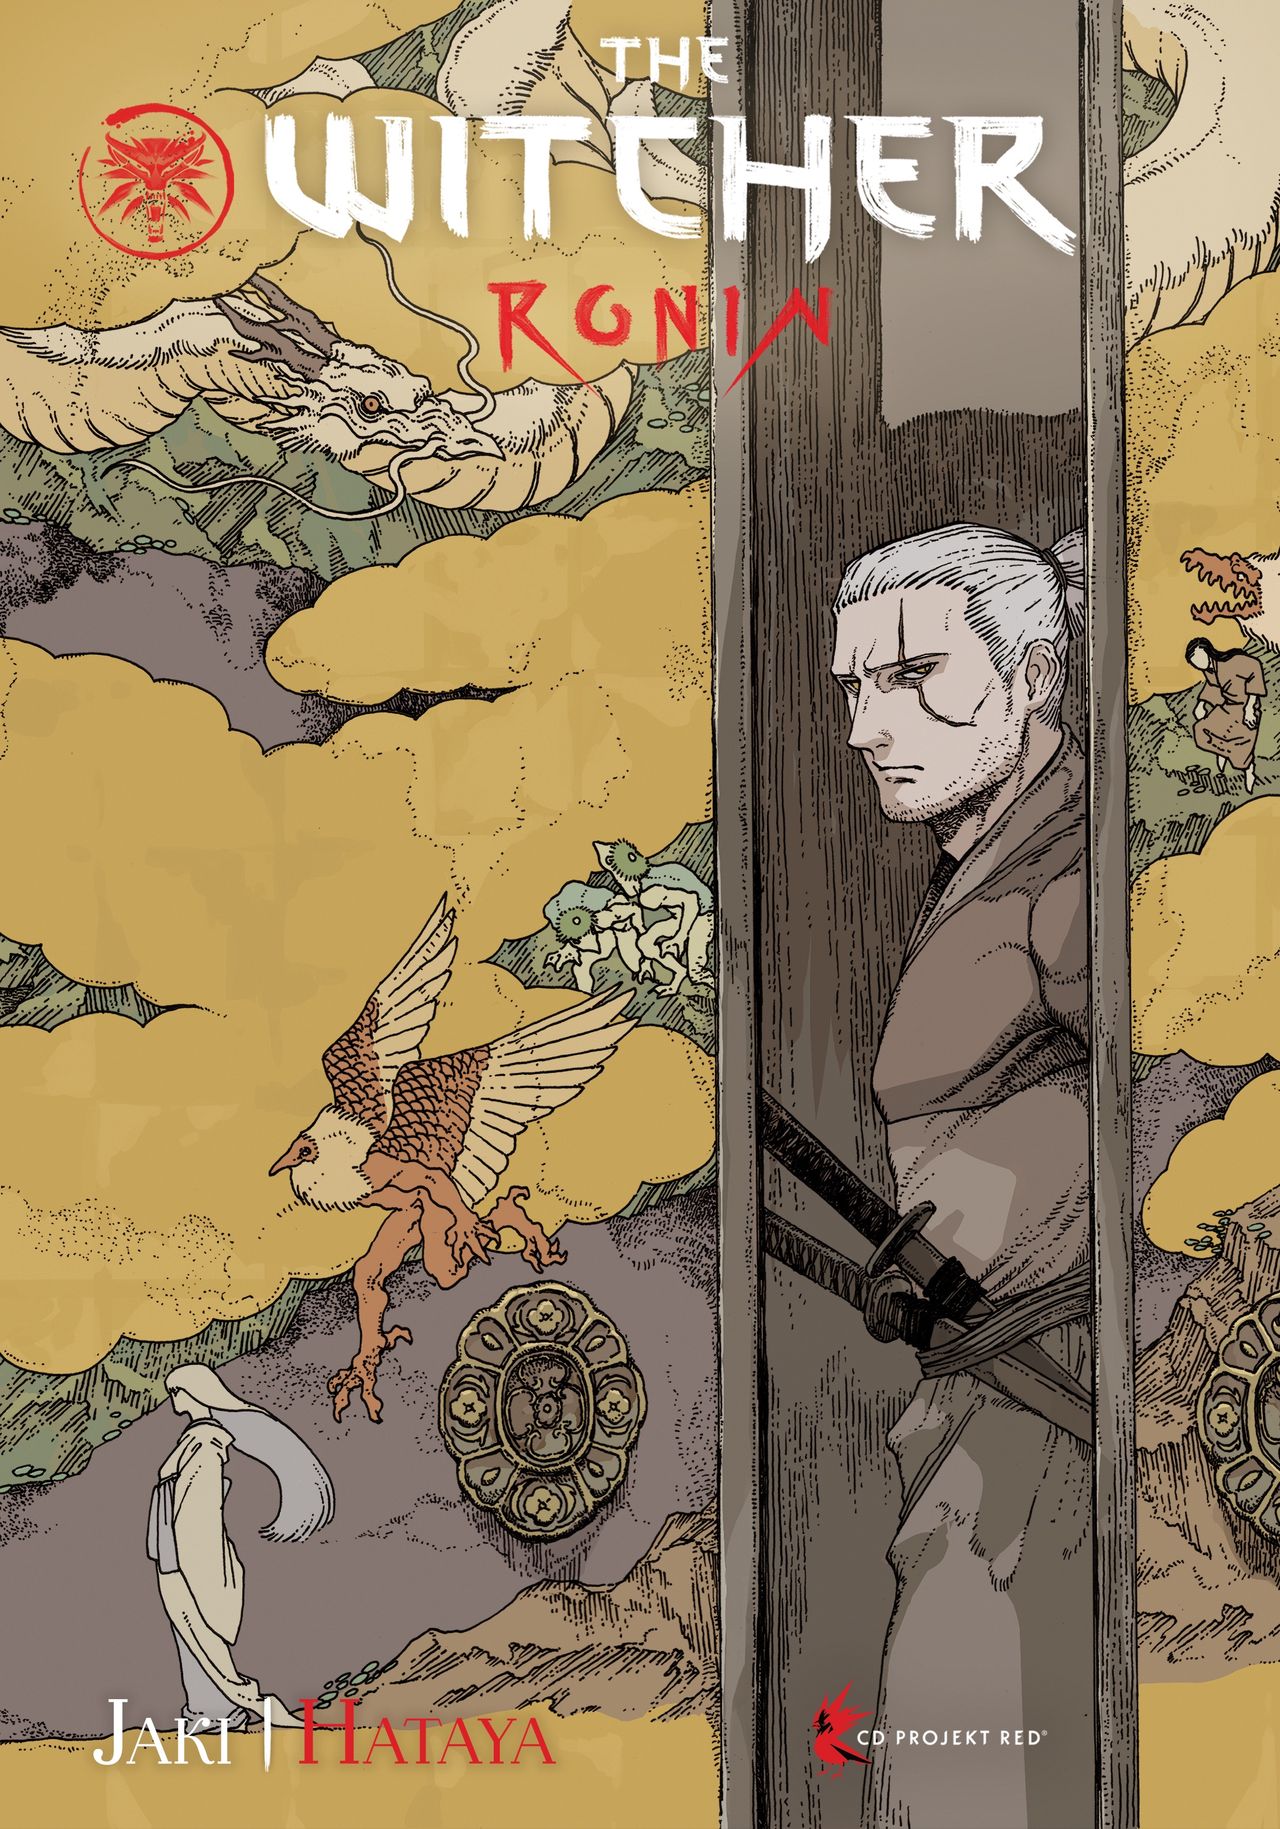 The Witcher: Ronin, manga Wiedźmin